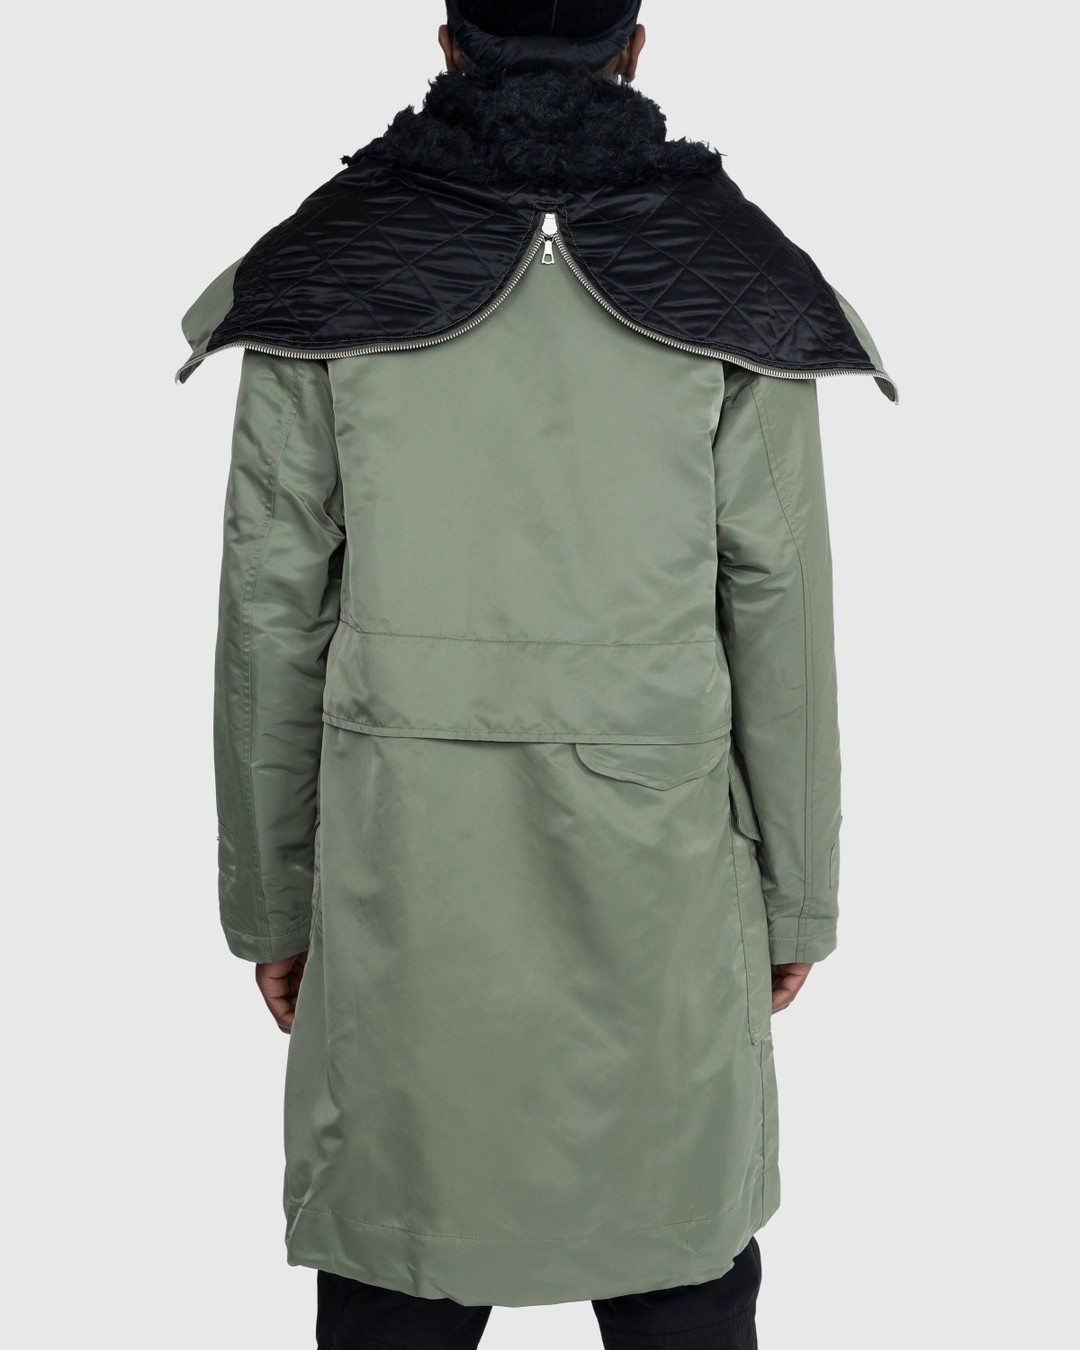 Dries van Noten – Verreli Jacket Khaki - Outerwear - Green - Image 4